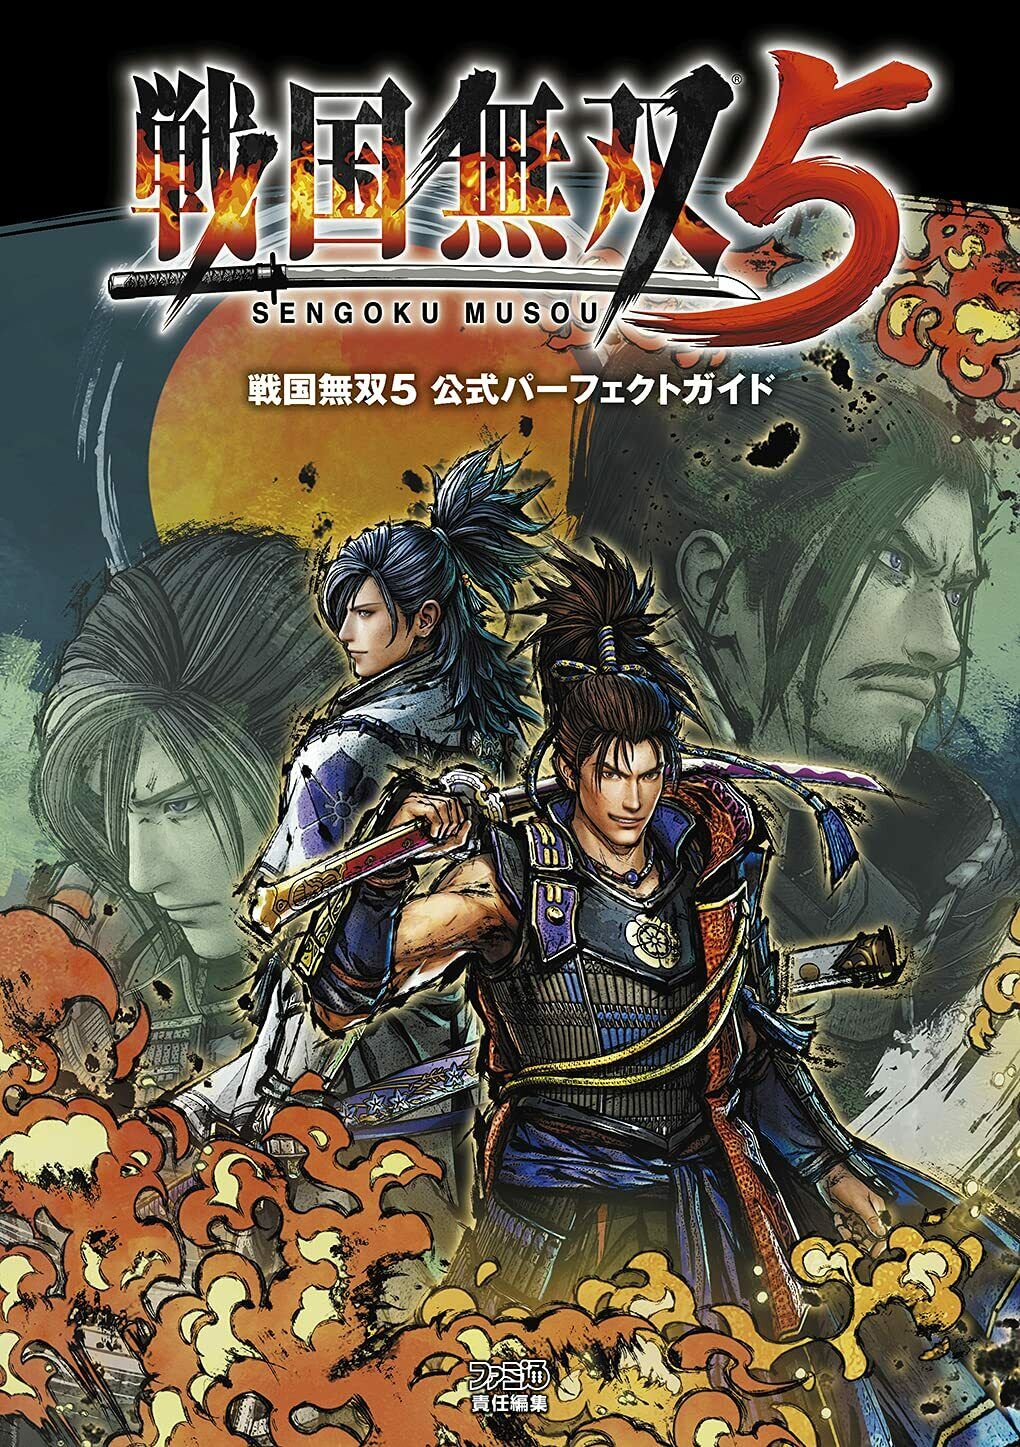 NEW' Sengoku Musou 5 Official Perfect Guide Book | JAPAN Game Samurai Warriors